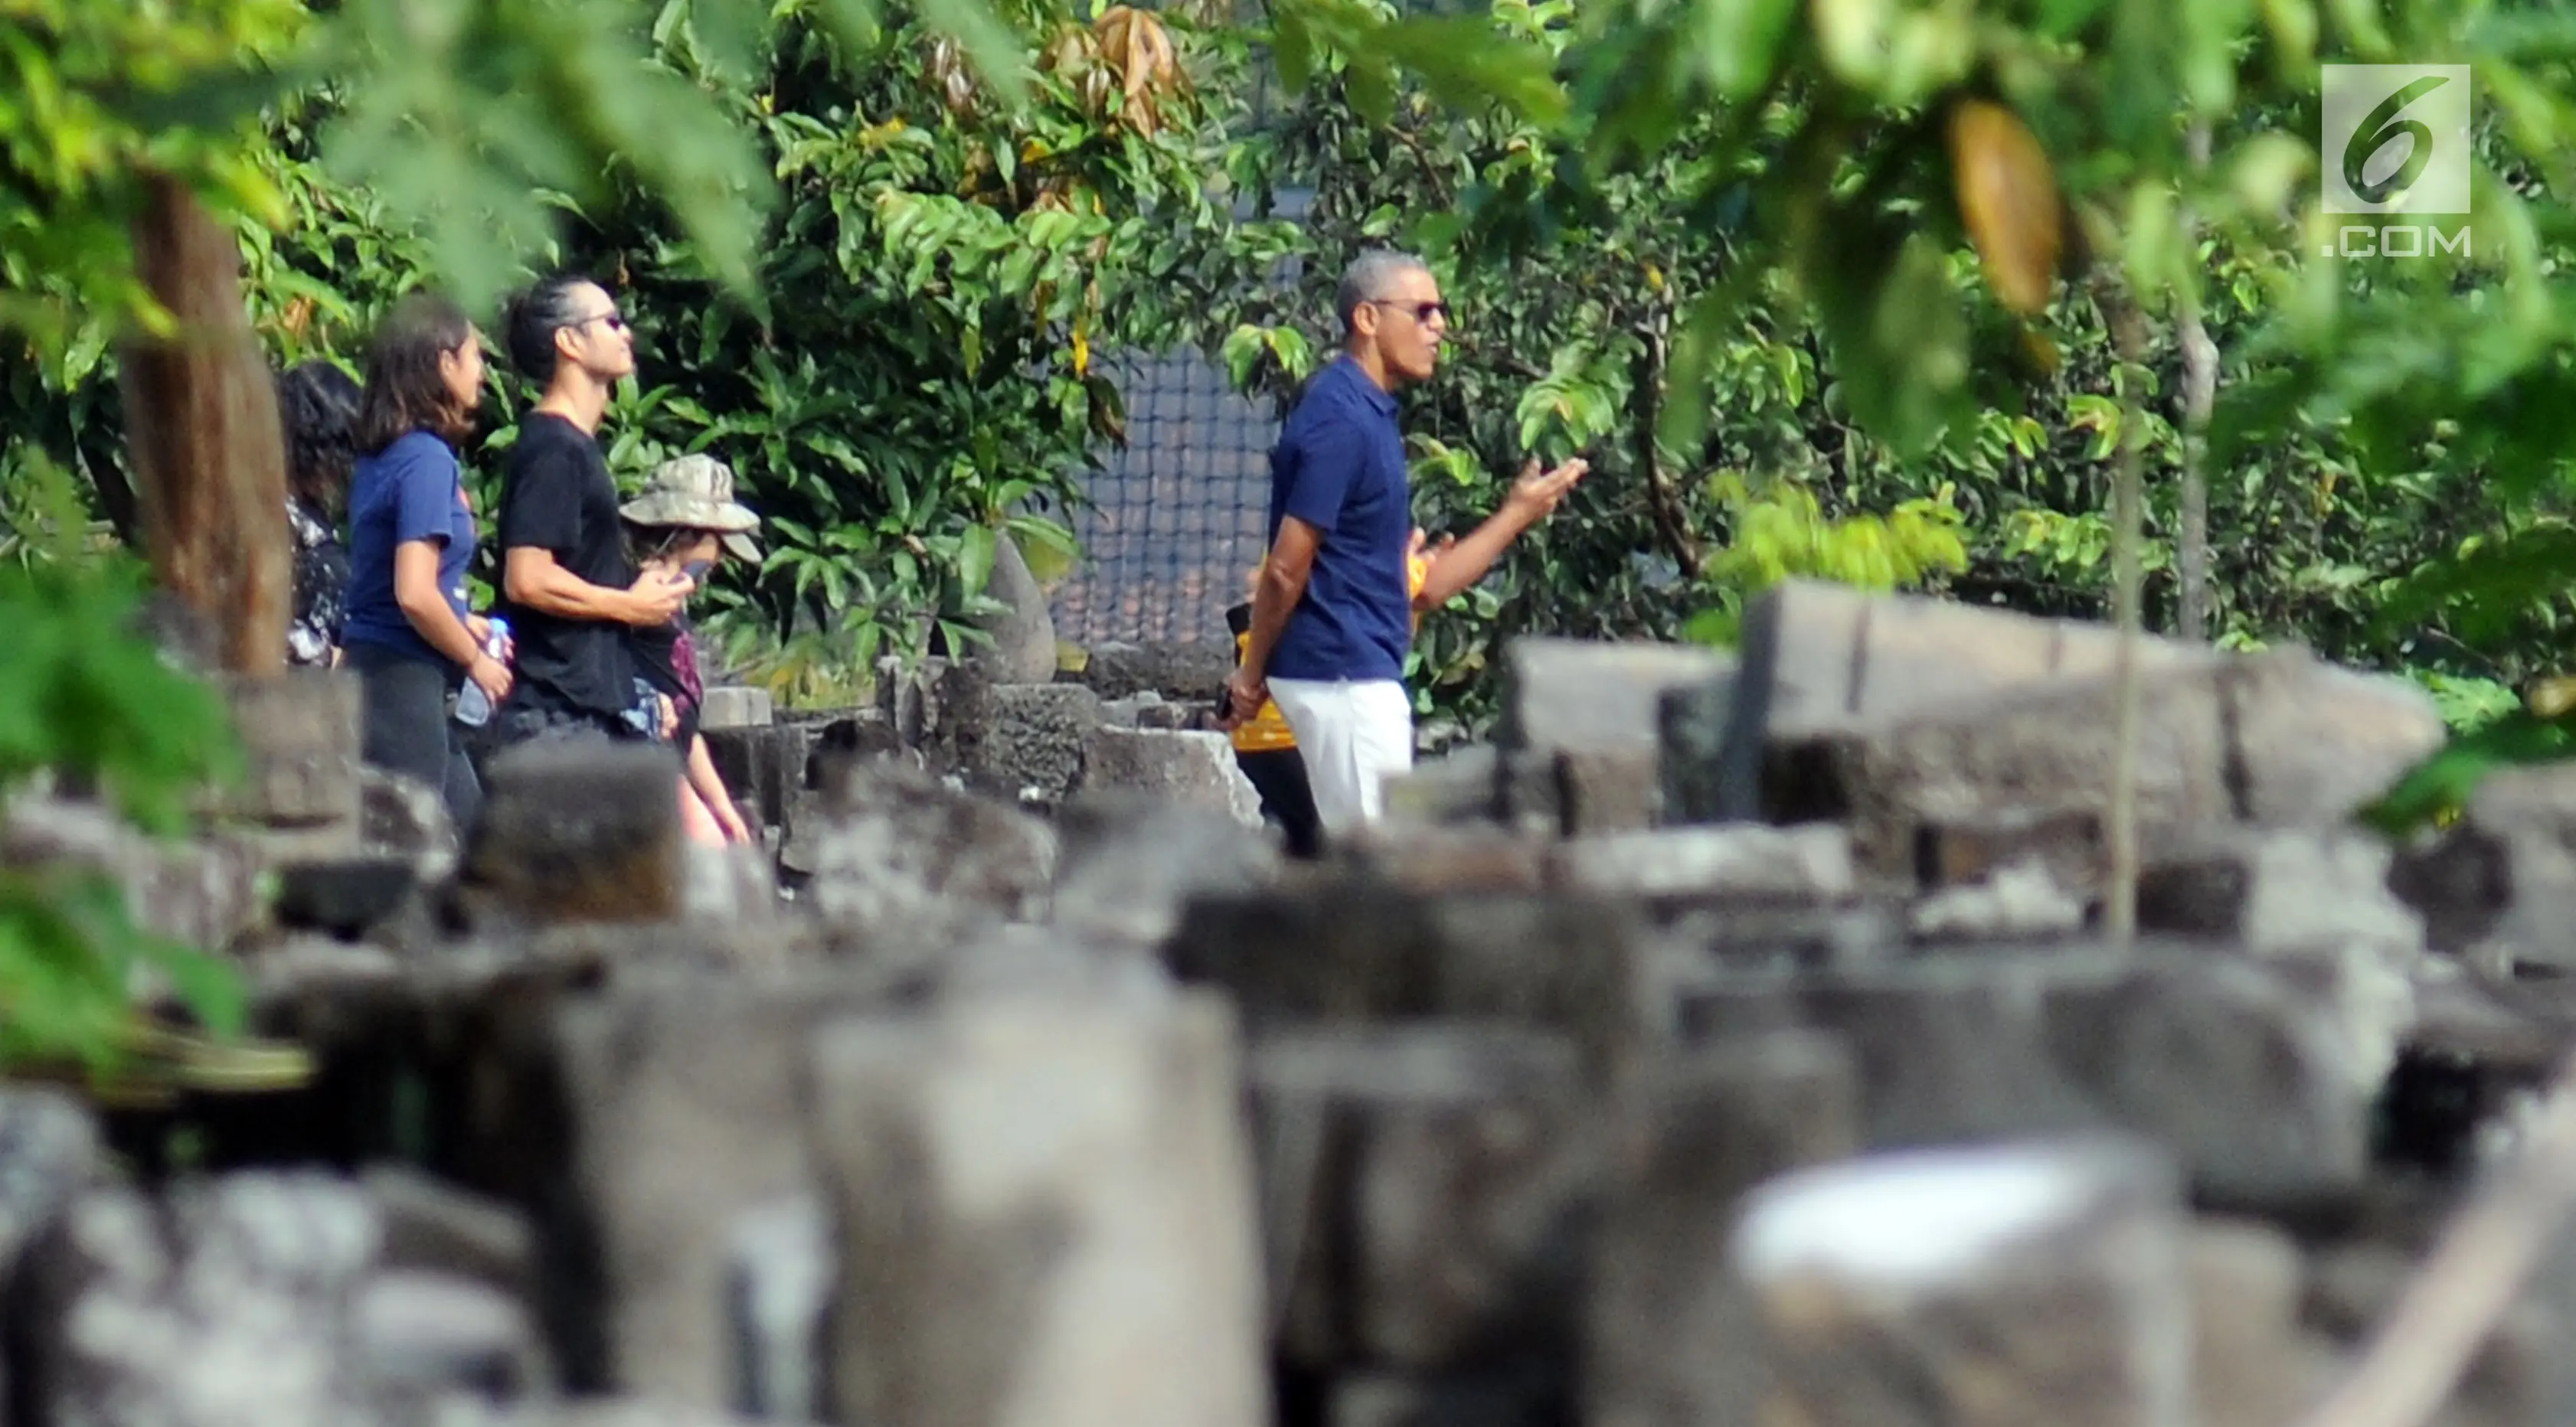 Mantan Presiden Amerika Serikat, Barack Obama saat memasuki kawasan Candi Prambanan, Yogyakarta, Kamis (29/6). Barack Obama beserta keluarga berlibur dan mengunjungi sejumlah tempat di Yogyakarta. (Liputan6.com/Helmi Fithriansyah)